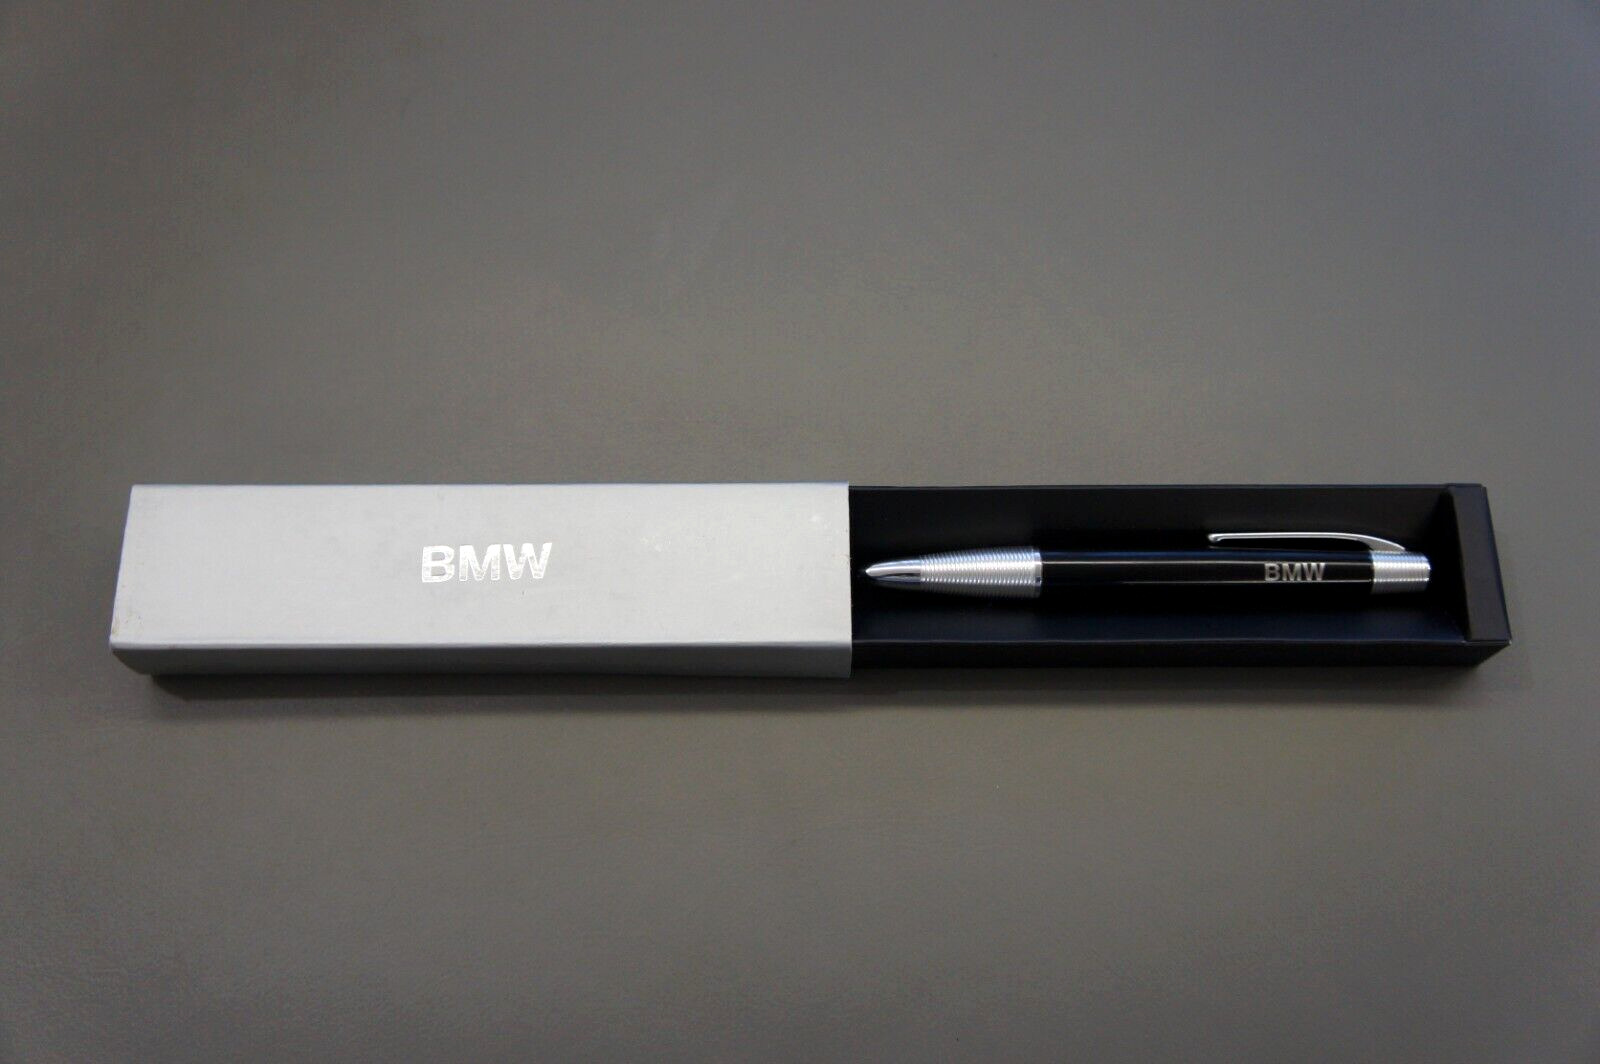 NIB Genuine BMW Japan Dealership Black Plastic & Metal Ballpoint Roller Ball Pen